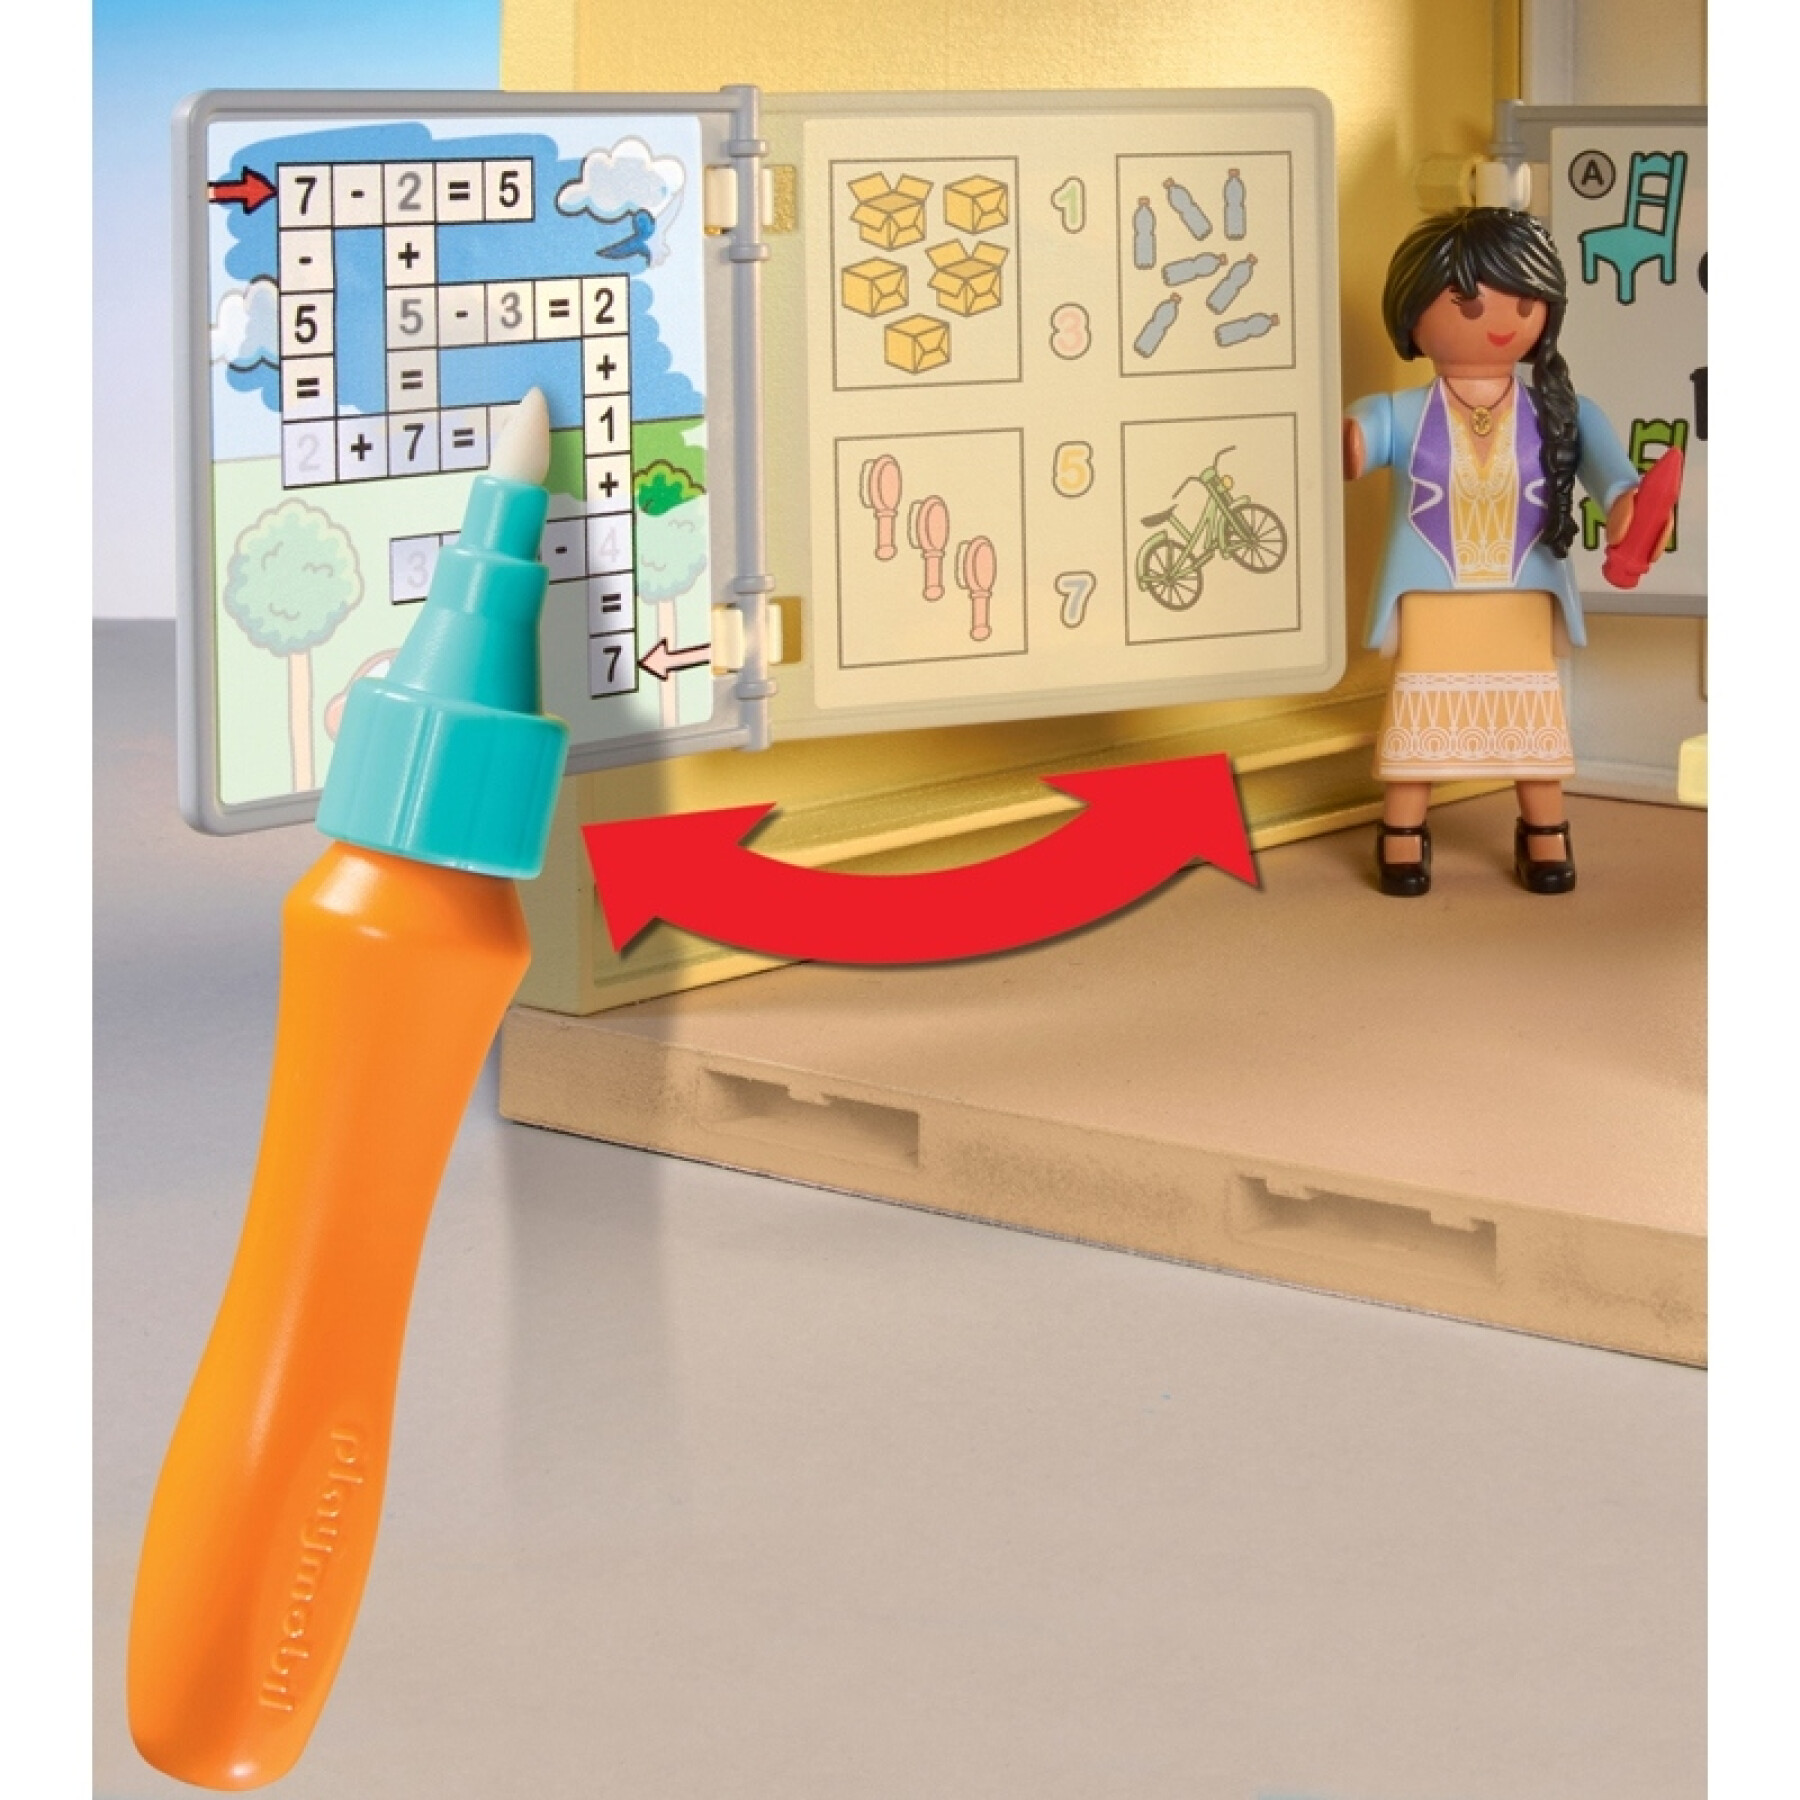 Bausätze eingerichtete Schule Playmobil